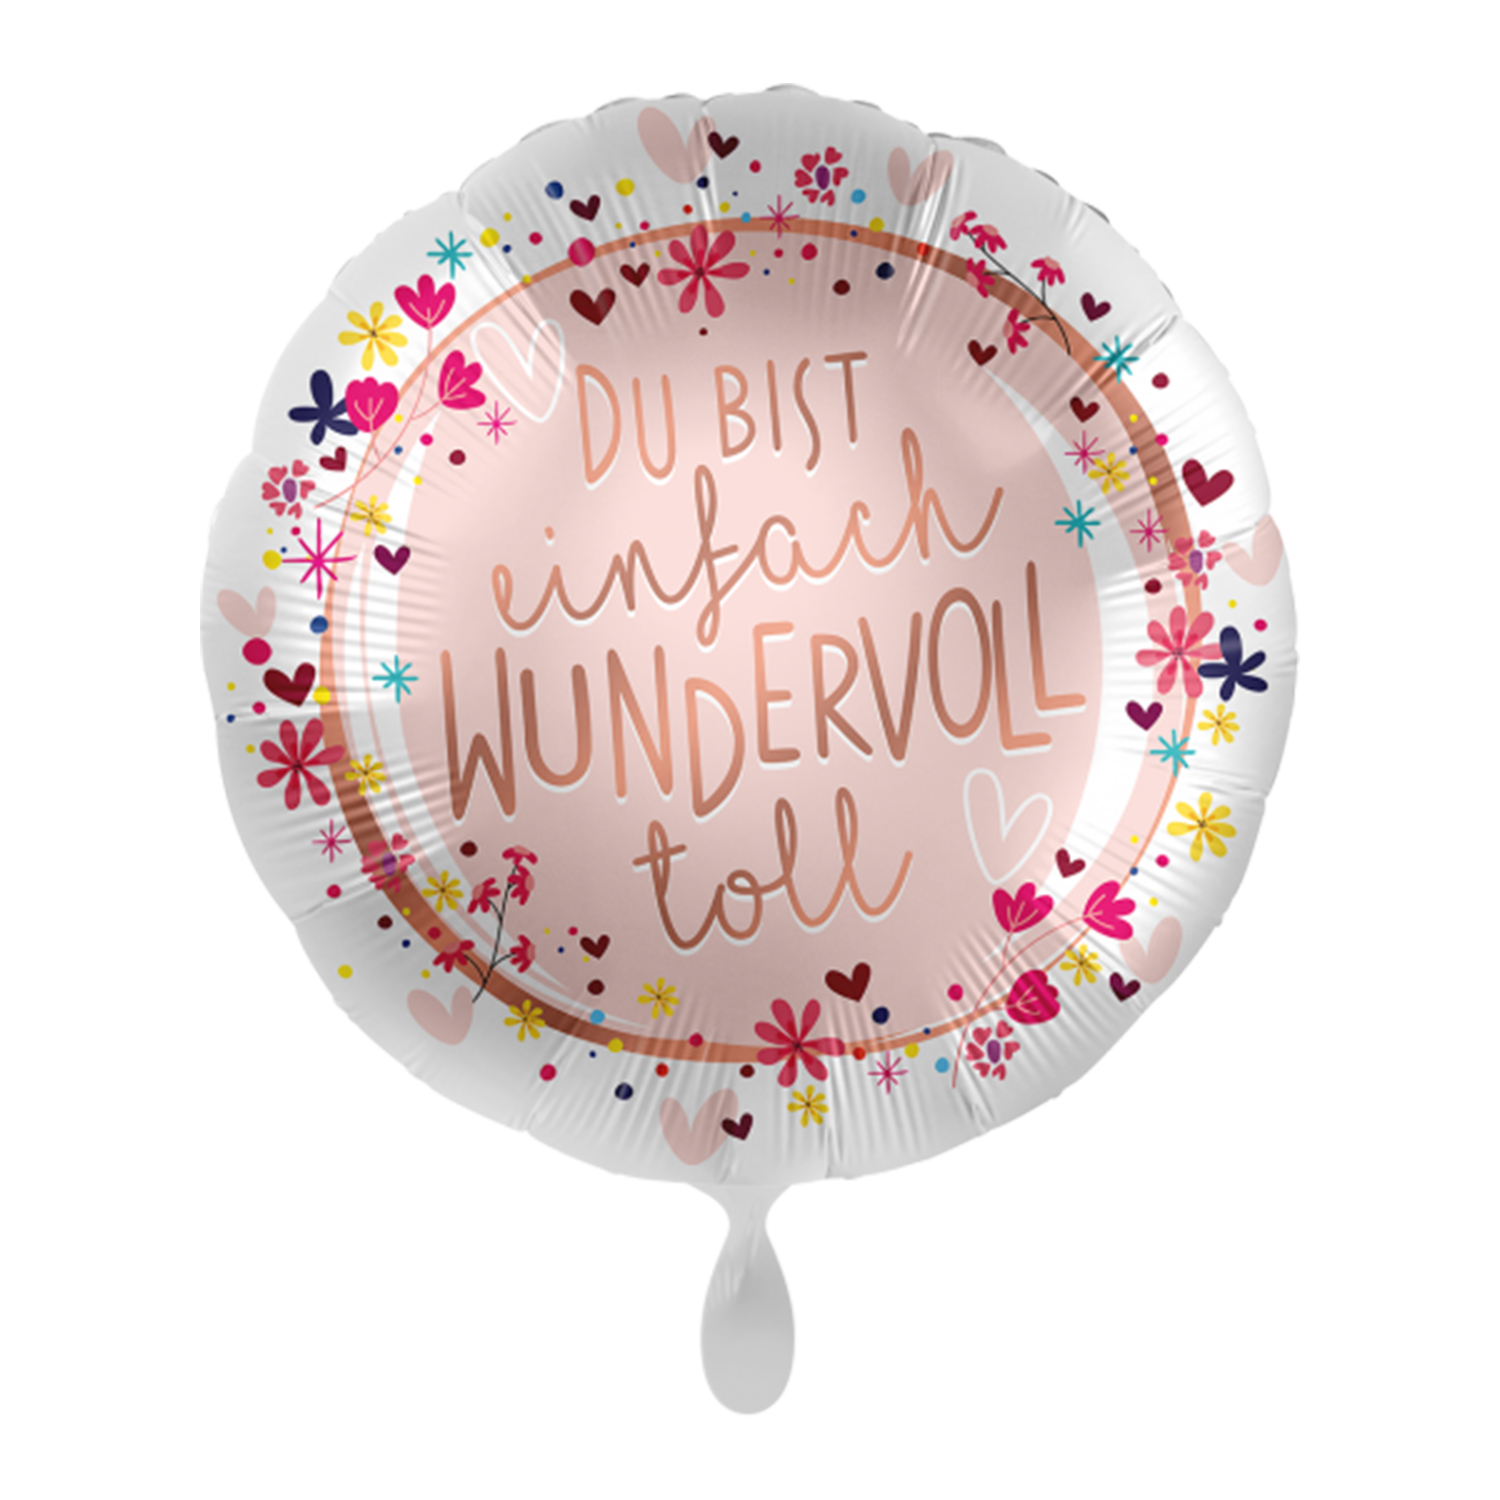 NEU Folienballon - Du bist einfach wundervoll toll - ca. 45cm Durchmesser